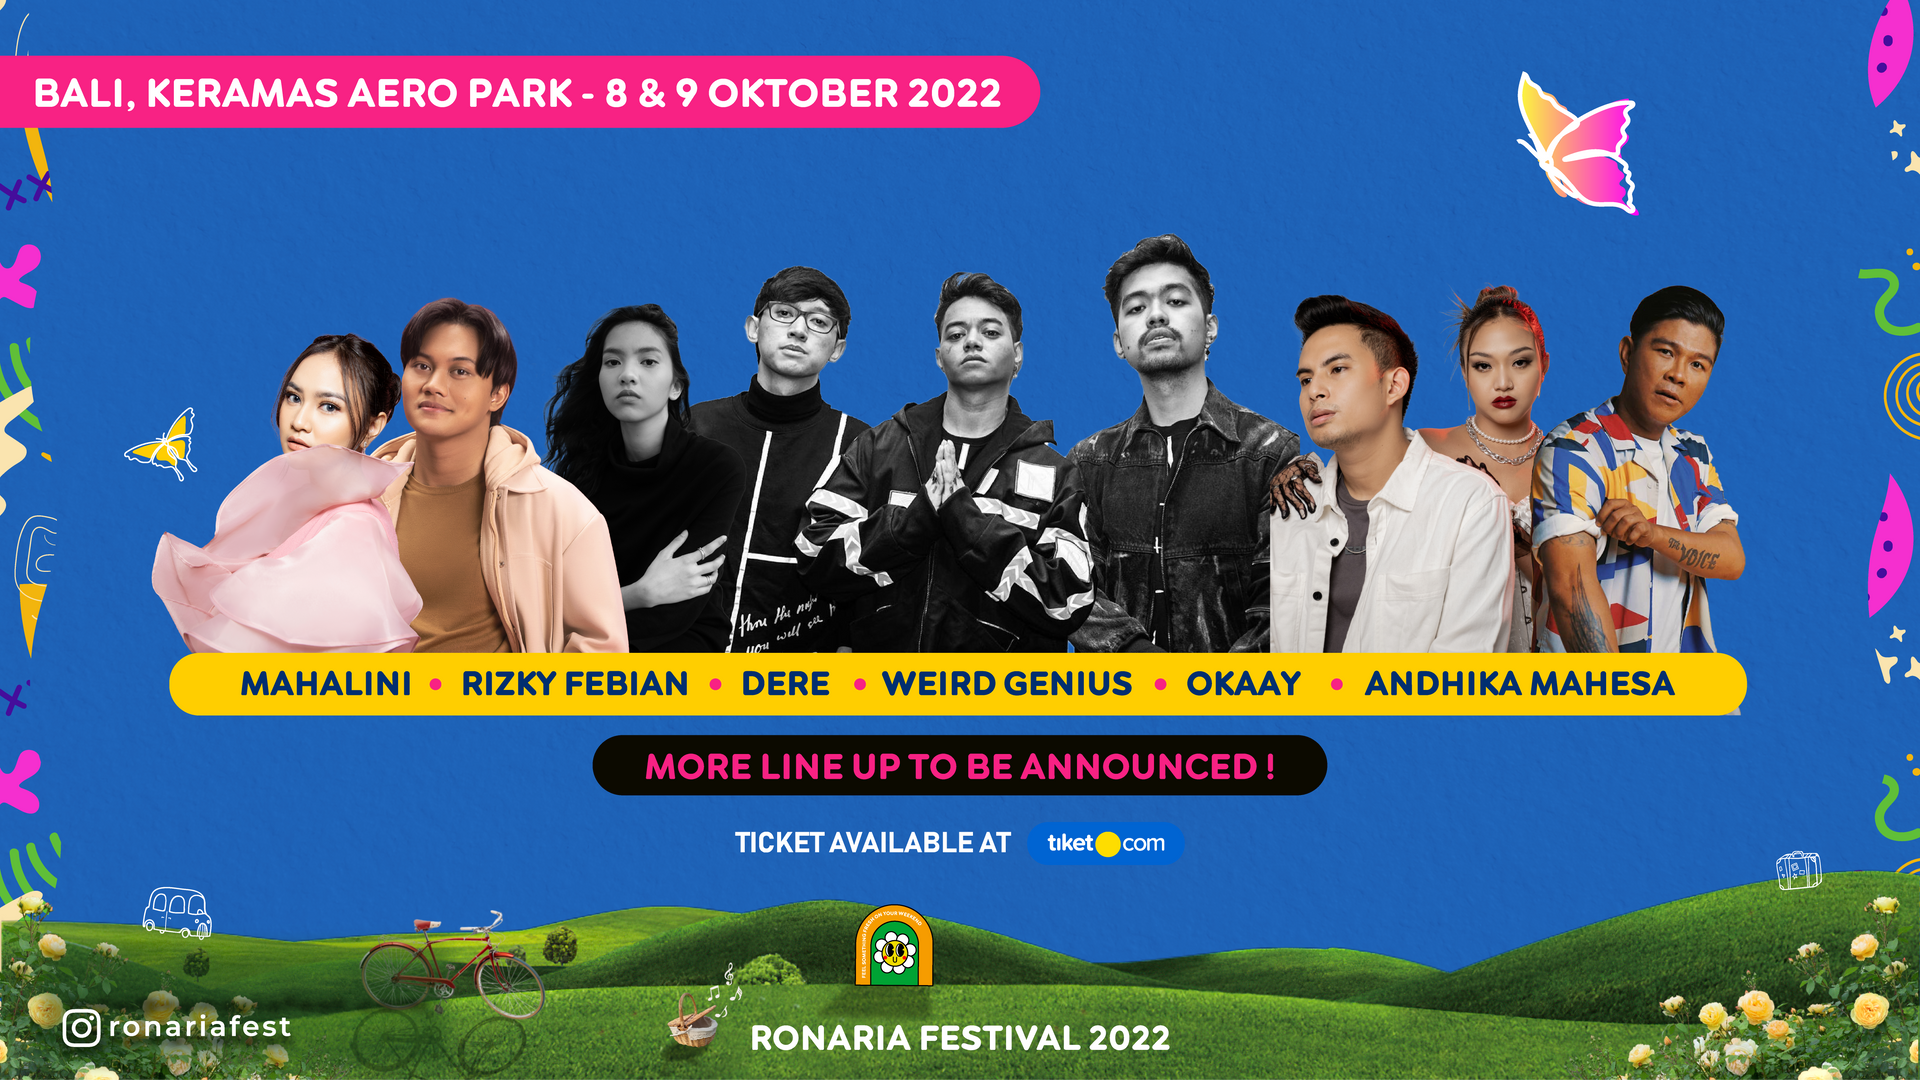 Ronaria Festival 2022